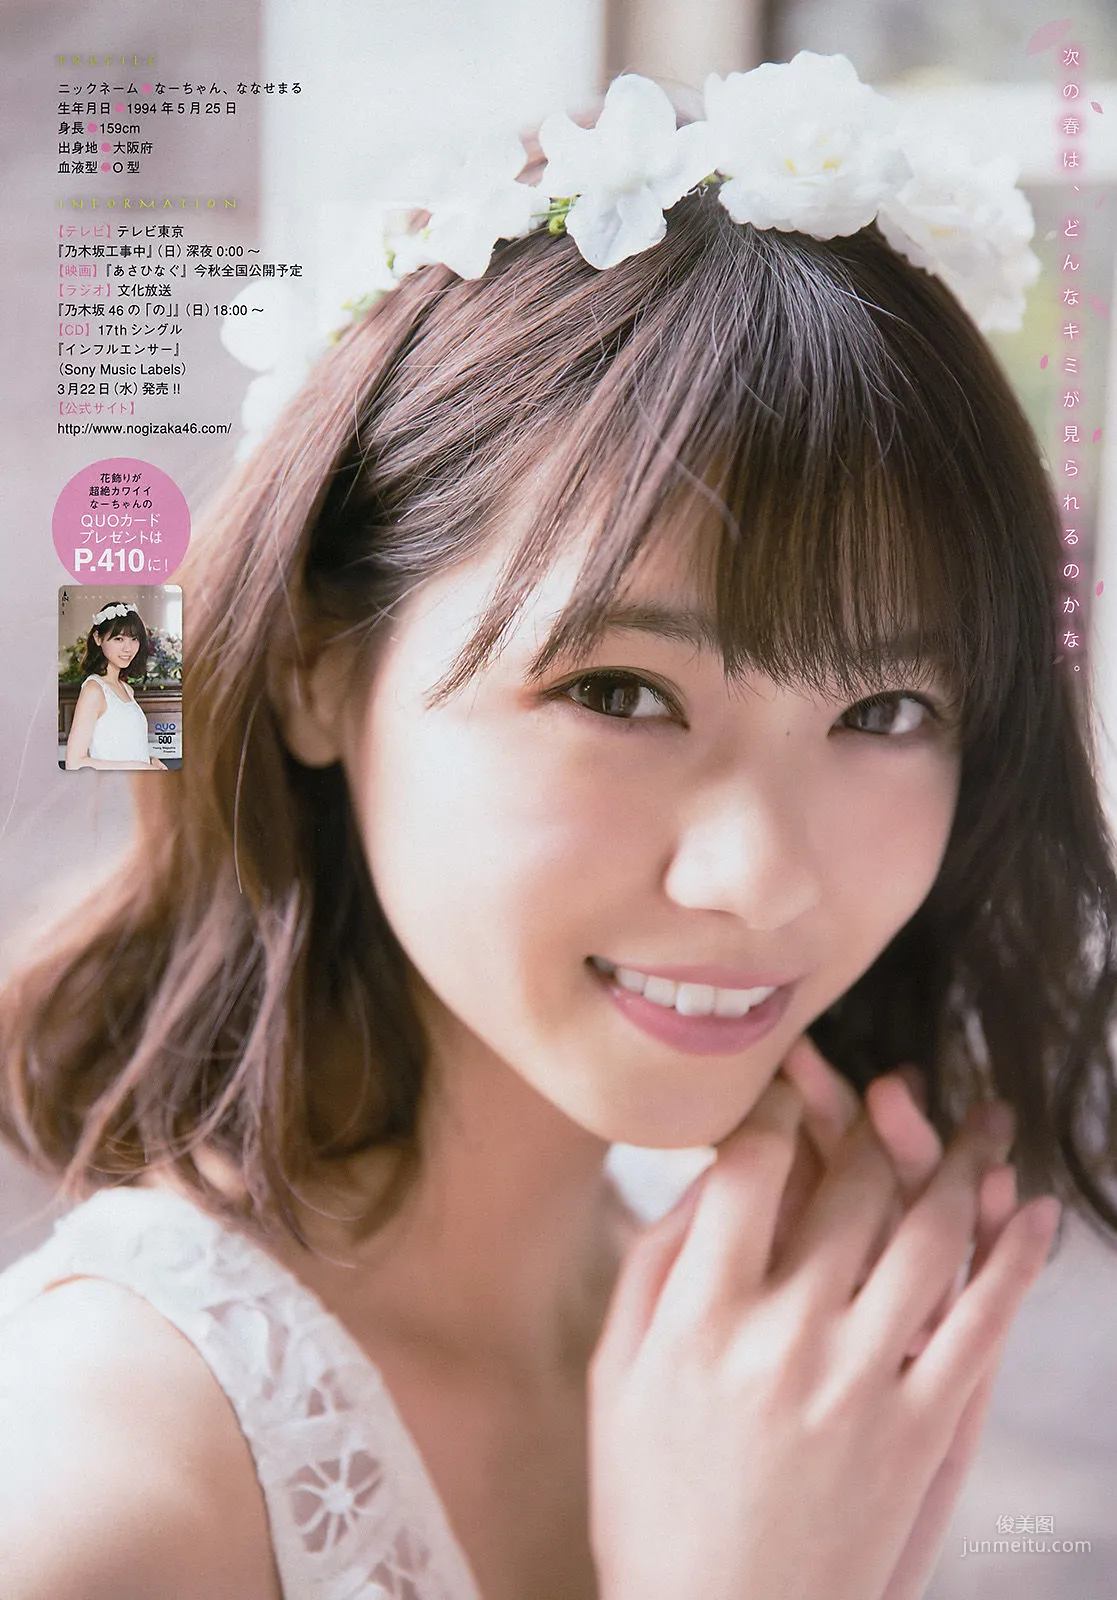 [Young Magazine] 西野七瀬 松永有紗 2017年No.15 写真杂志7